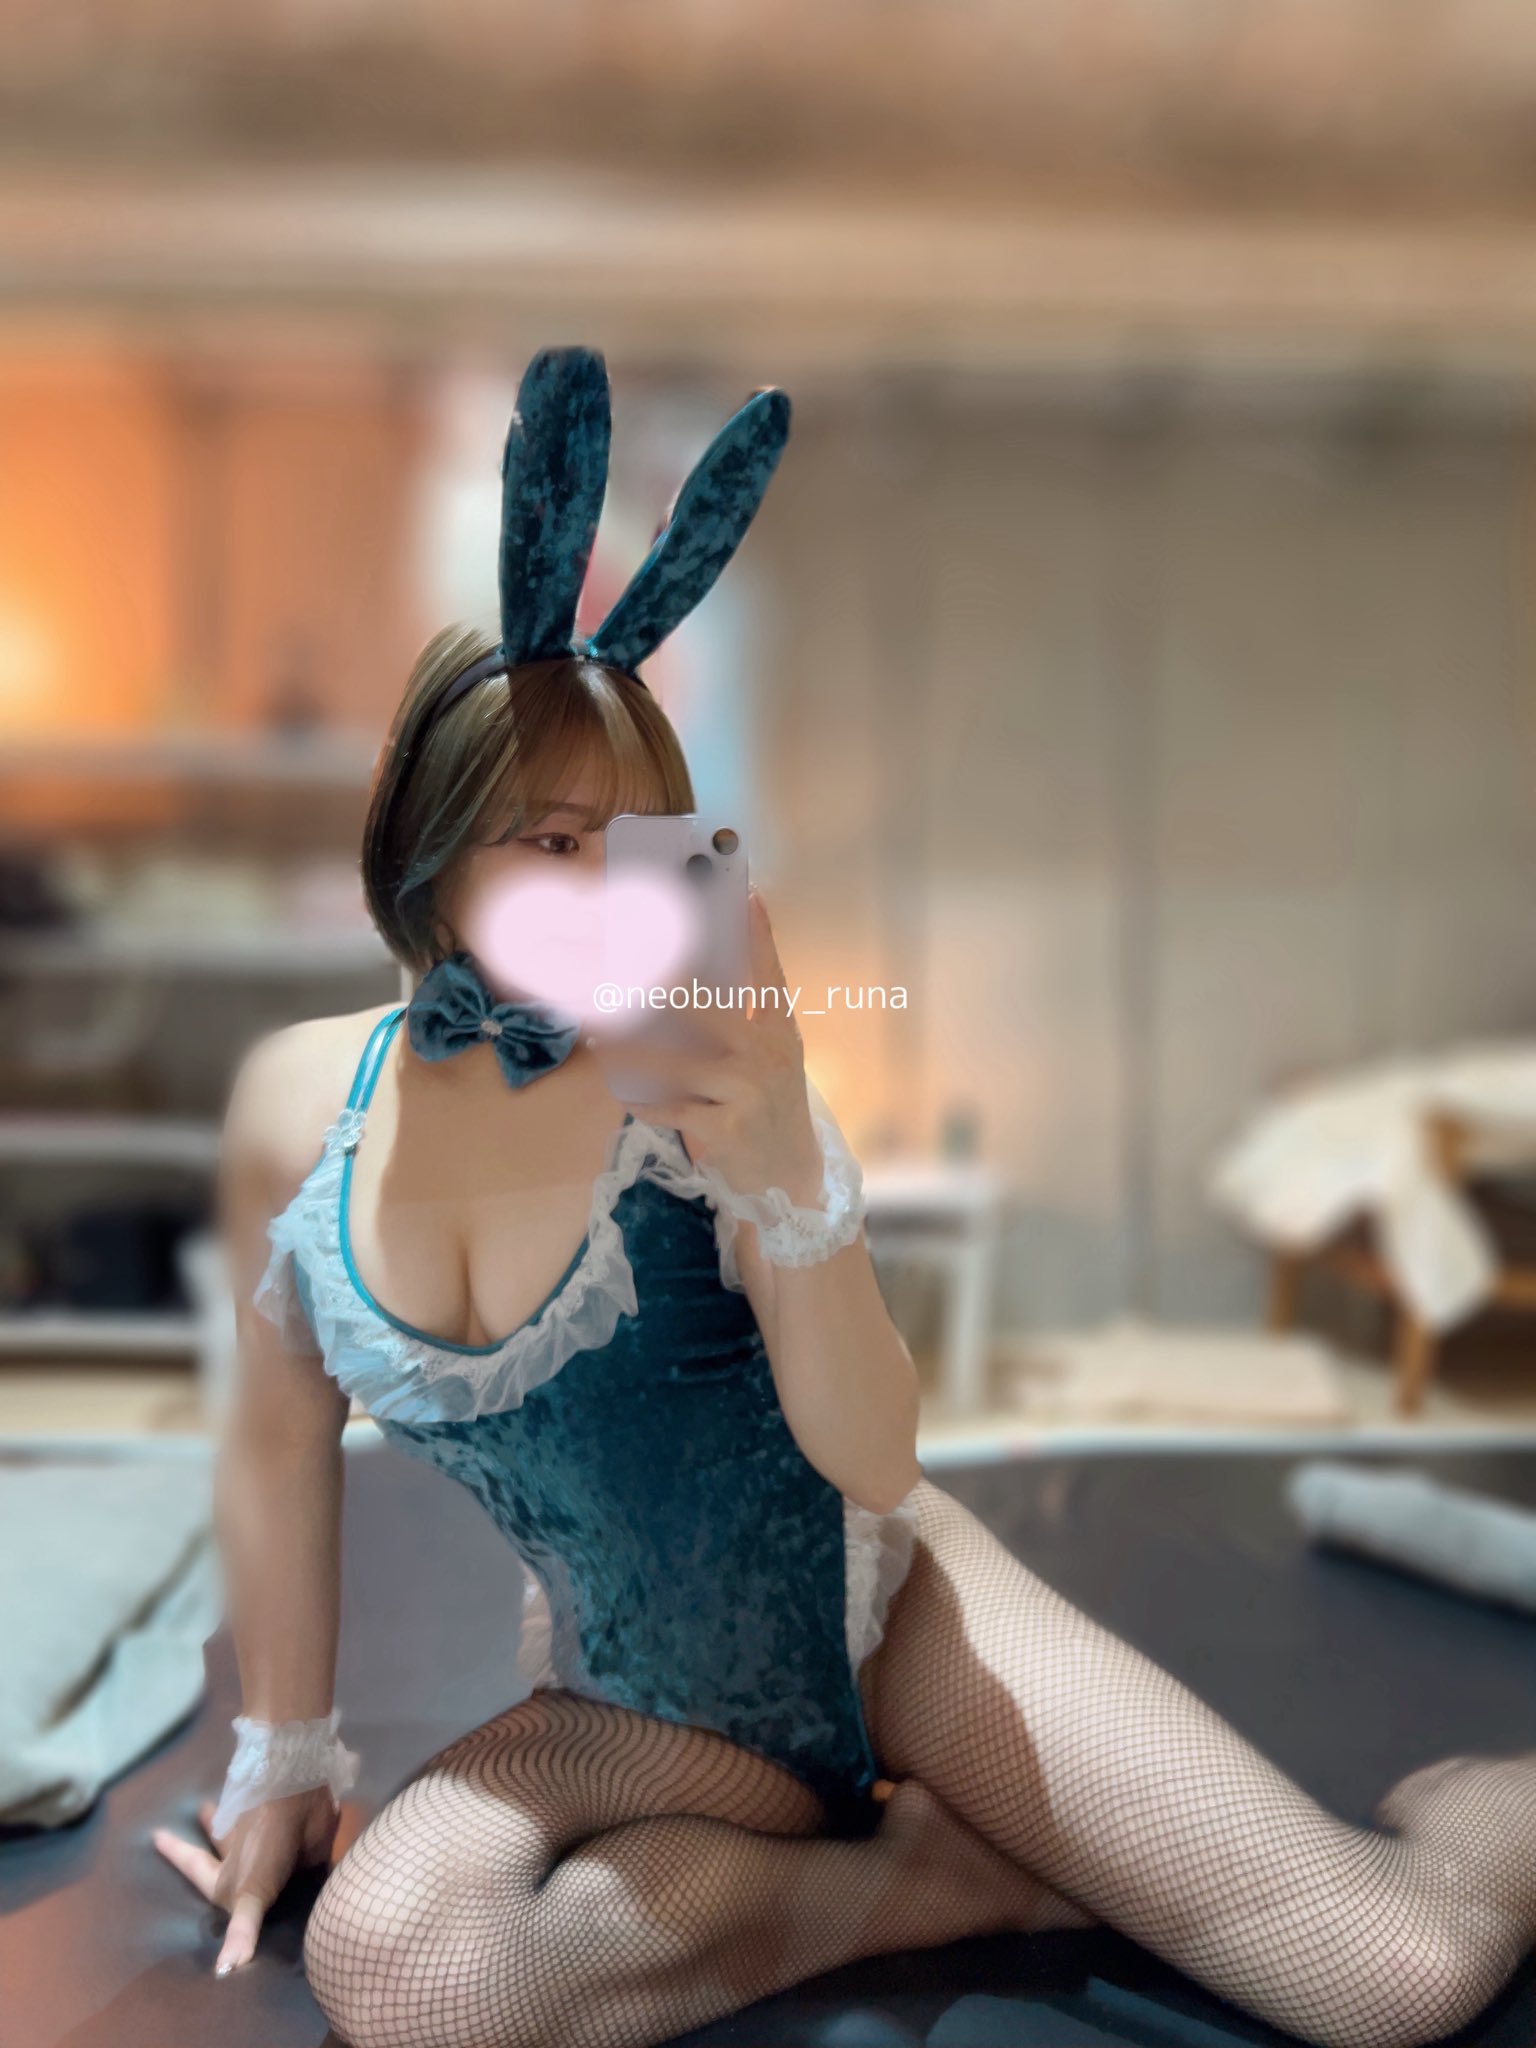 Neo bunny（ネオバニー）大宮・久喜